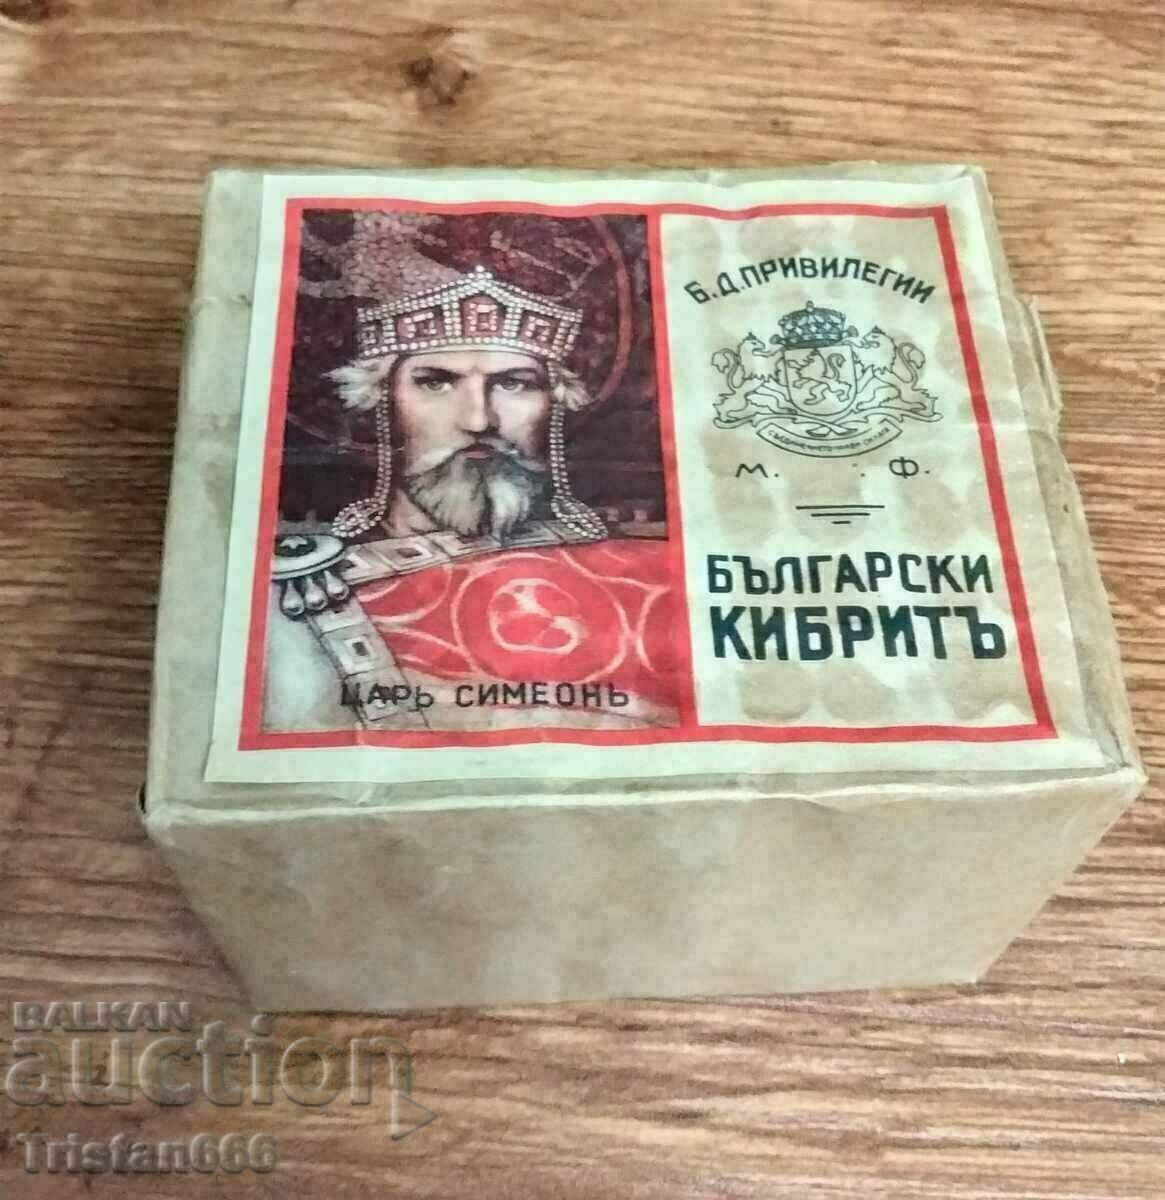 Pack of matches "Tsar Simeon"